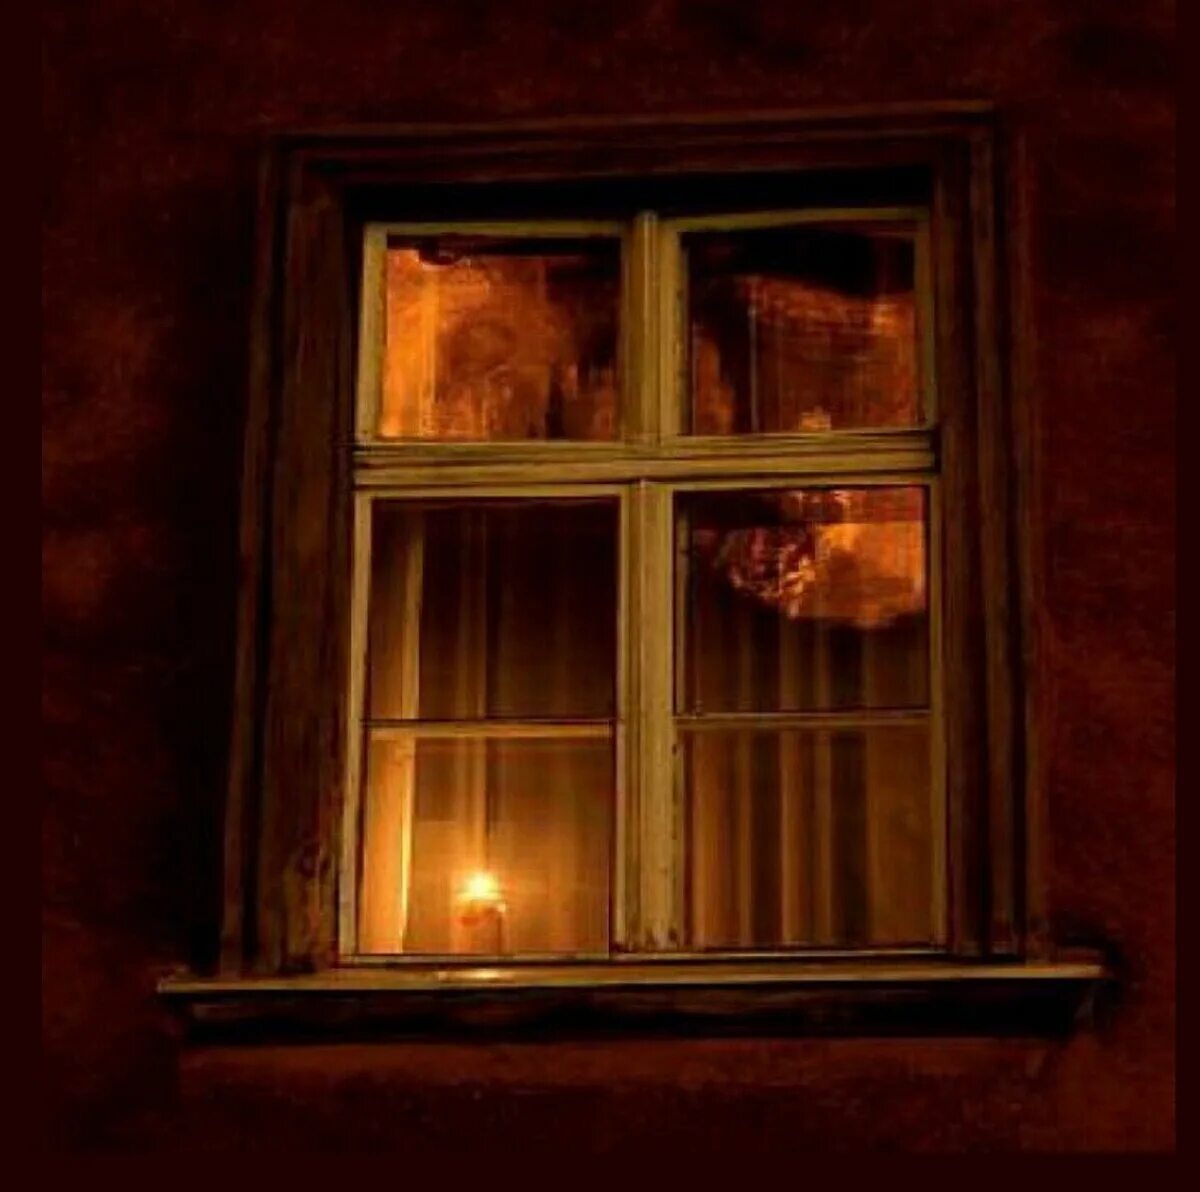 Warm win. Вечернее окно. Свет в окне. Окно вечер. Вечерние окна домов.